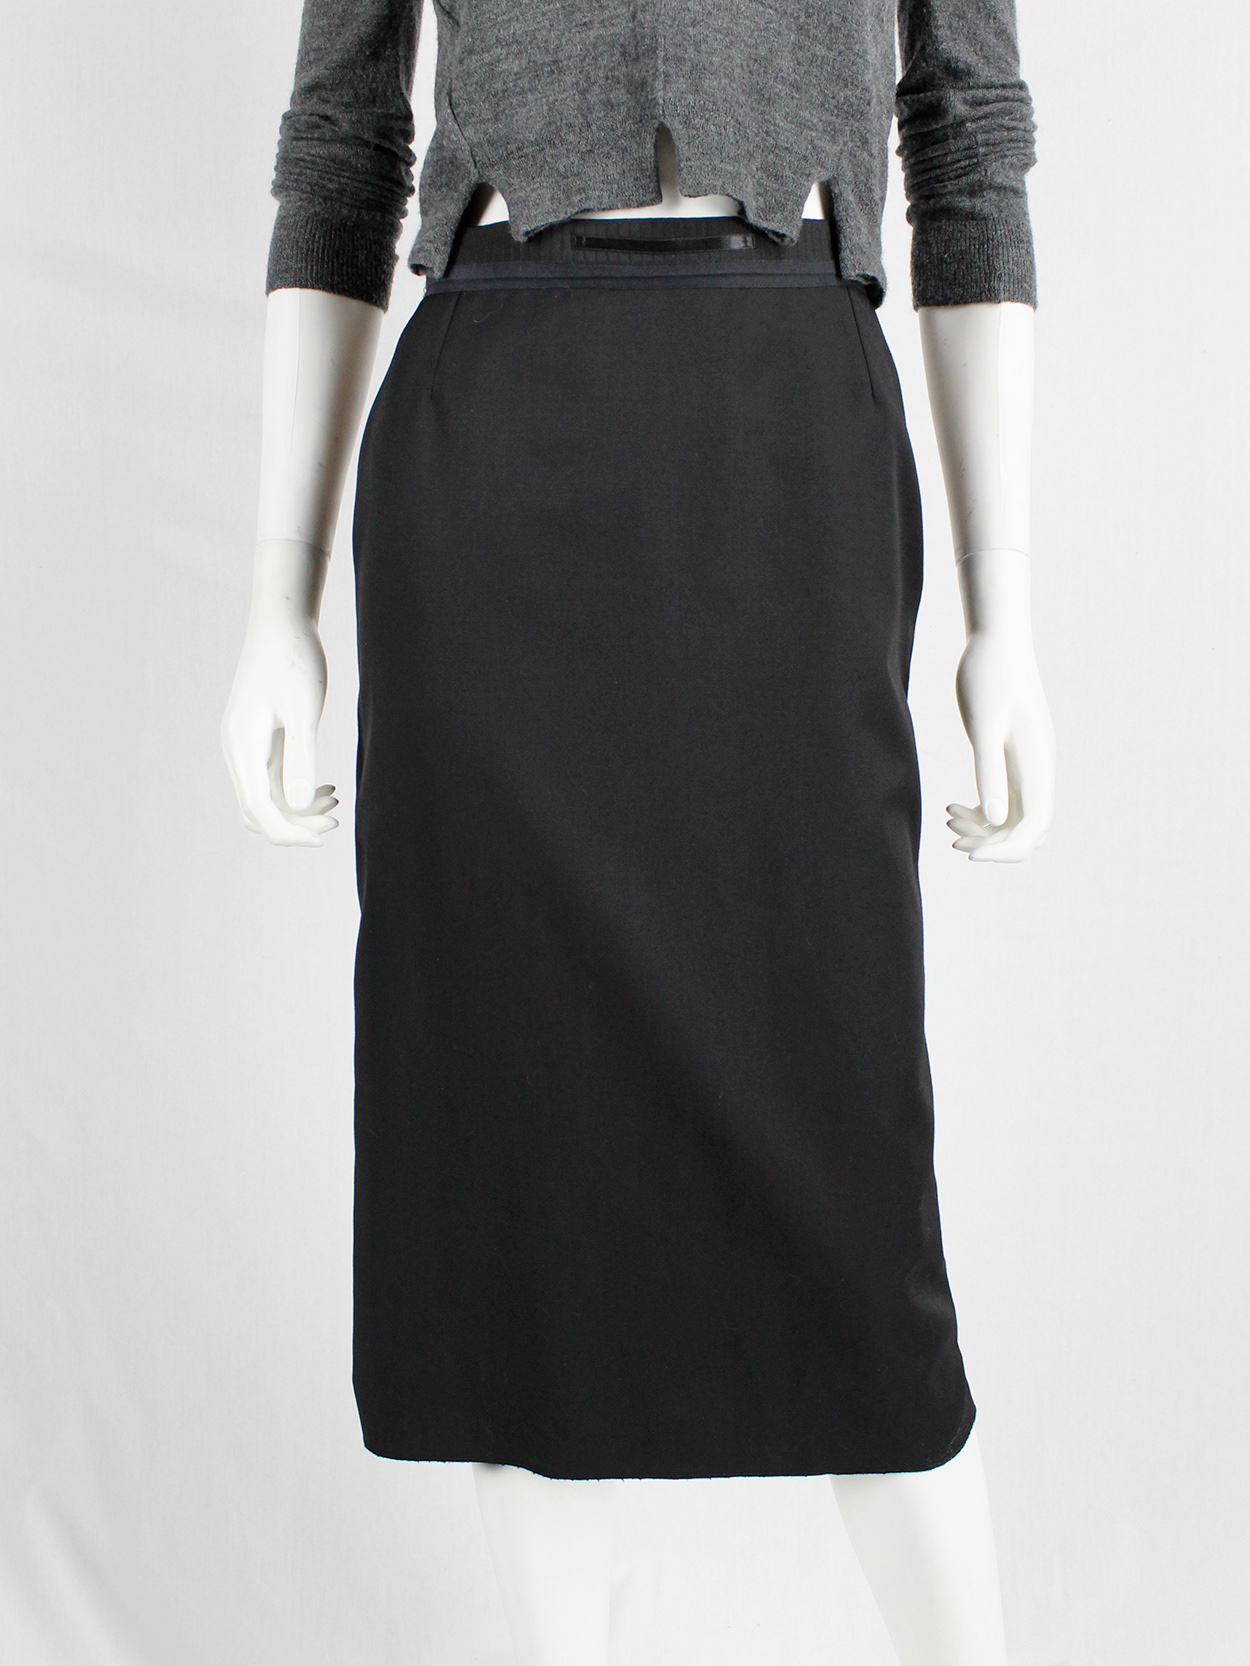 Maison Martin Margiela black pencil skirt with chopped hem fall 2000 (12)